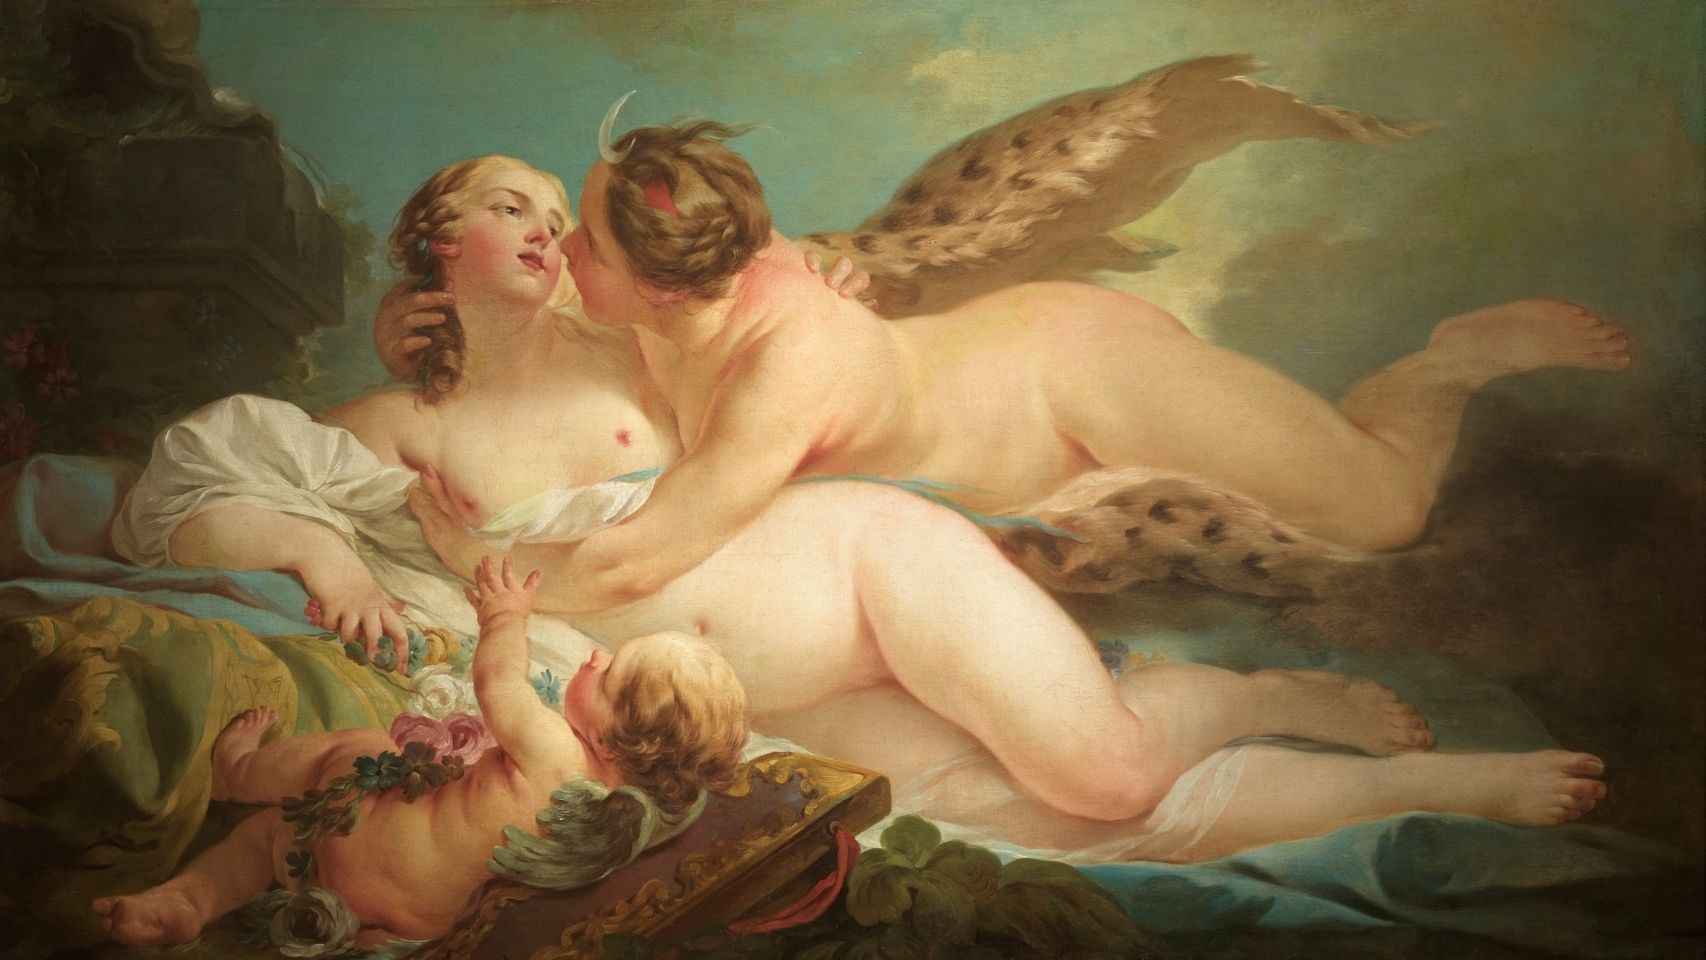 Jean-Baptiste Marie Pierre pintó esta escena transexual en 1745.